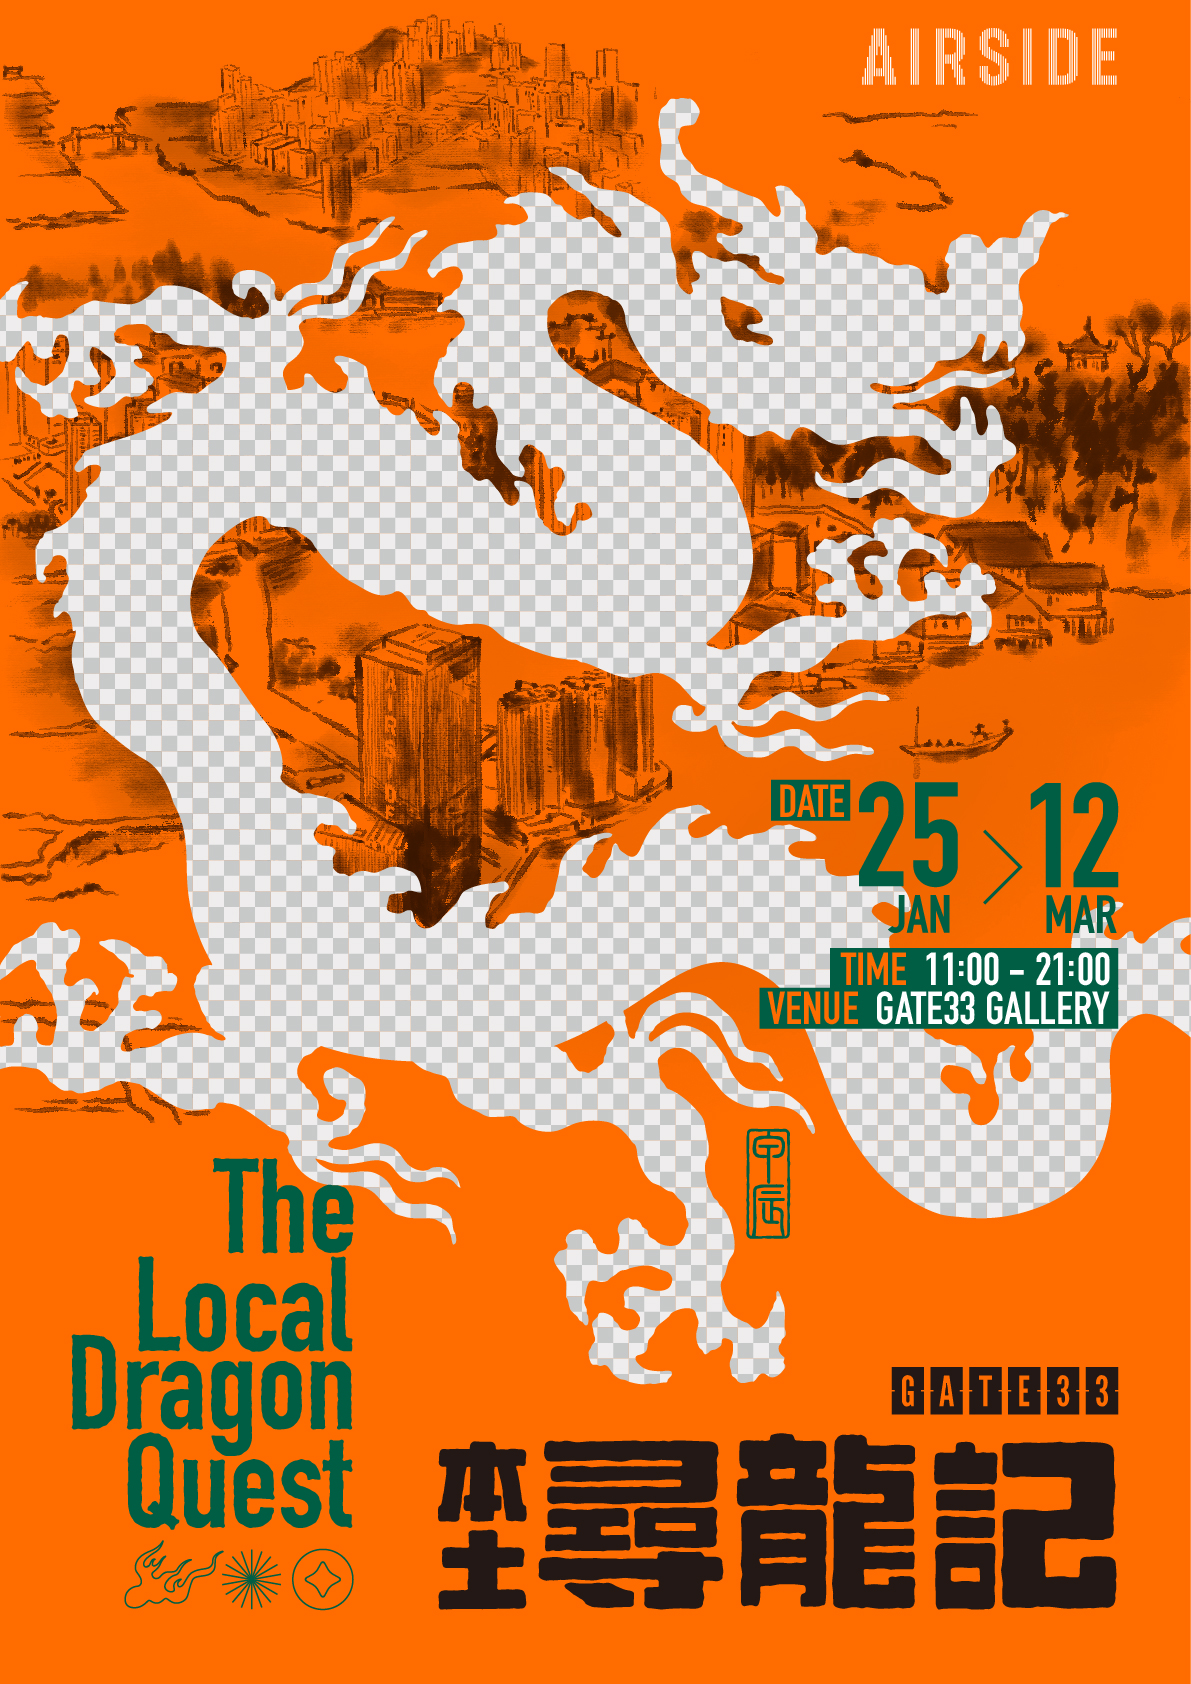 The Local Dragon Quest Exhibition